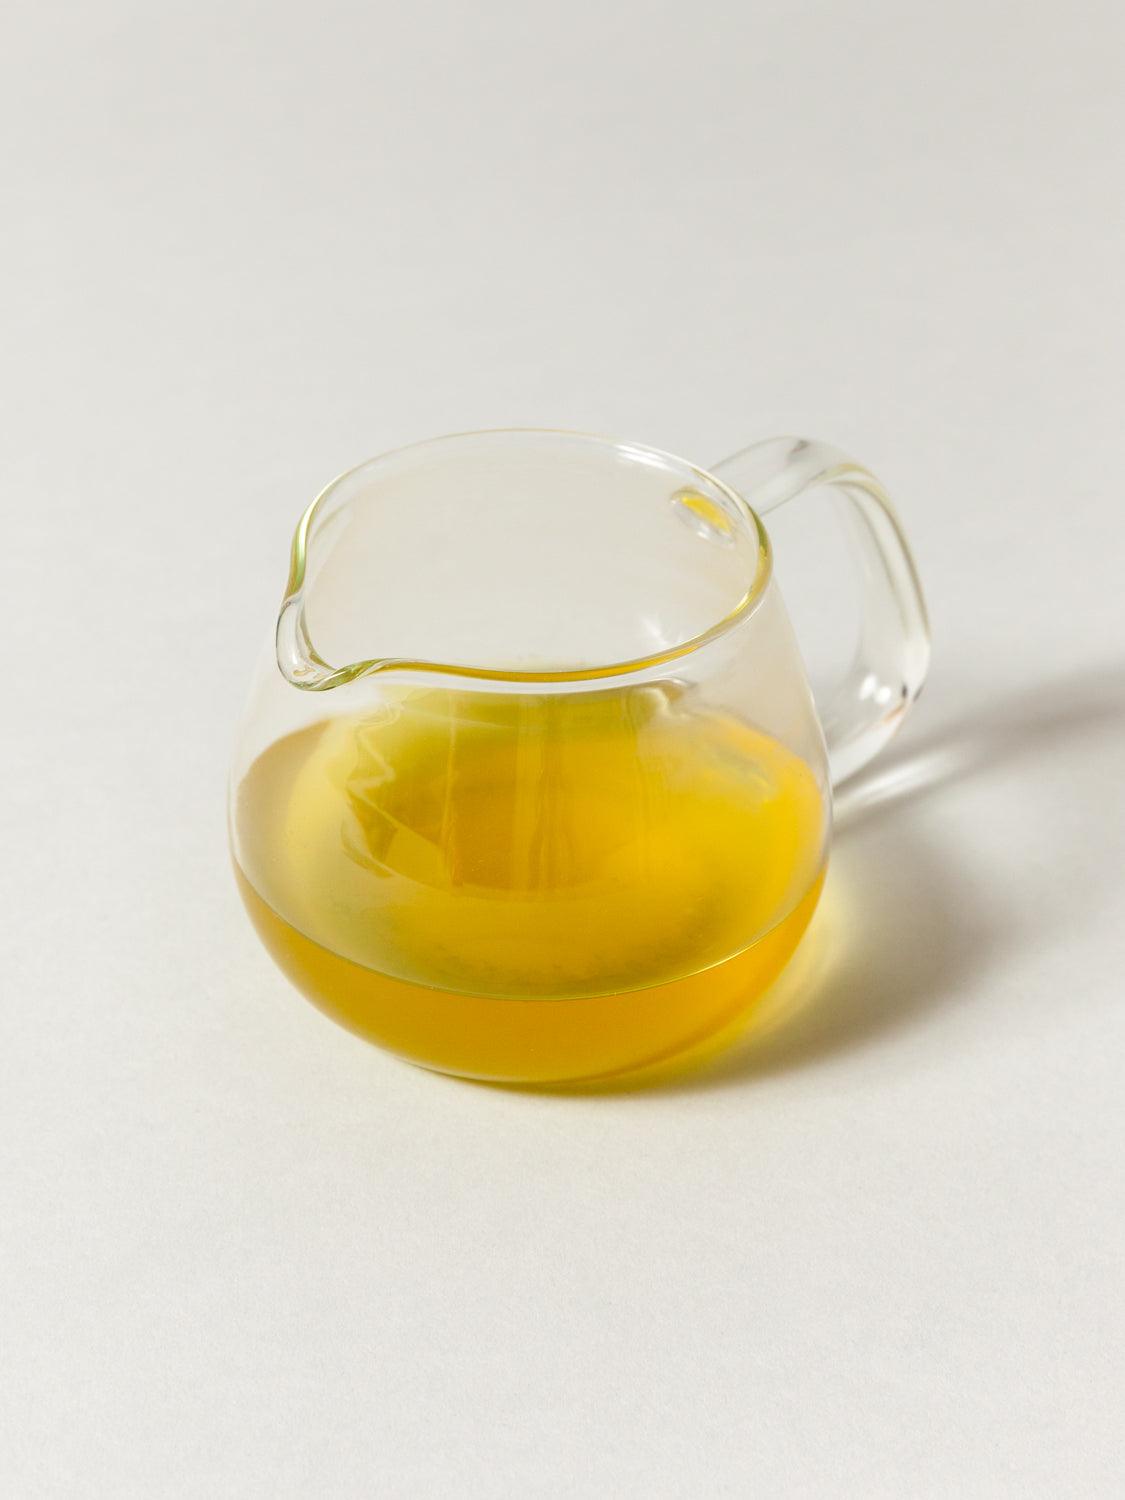 Morihata Organic Asatsuyu Loose Leaf Green Tea